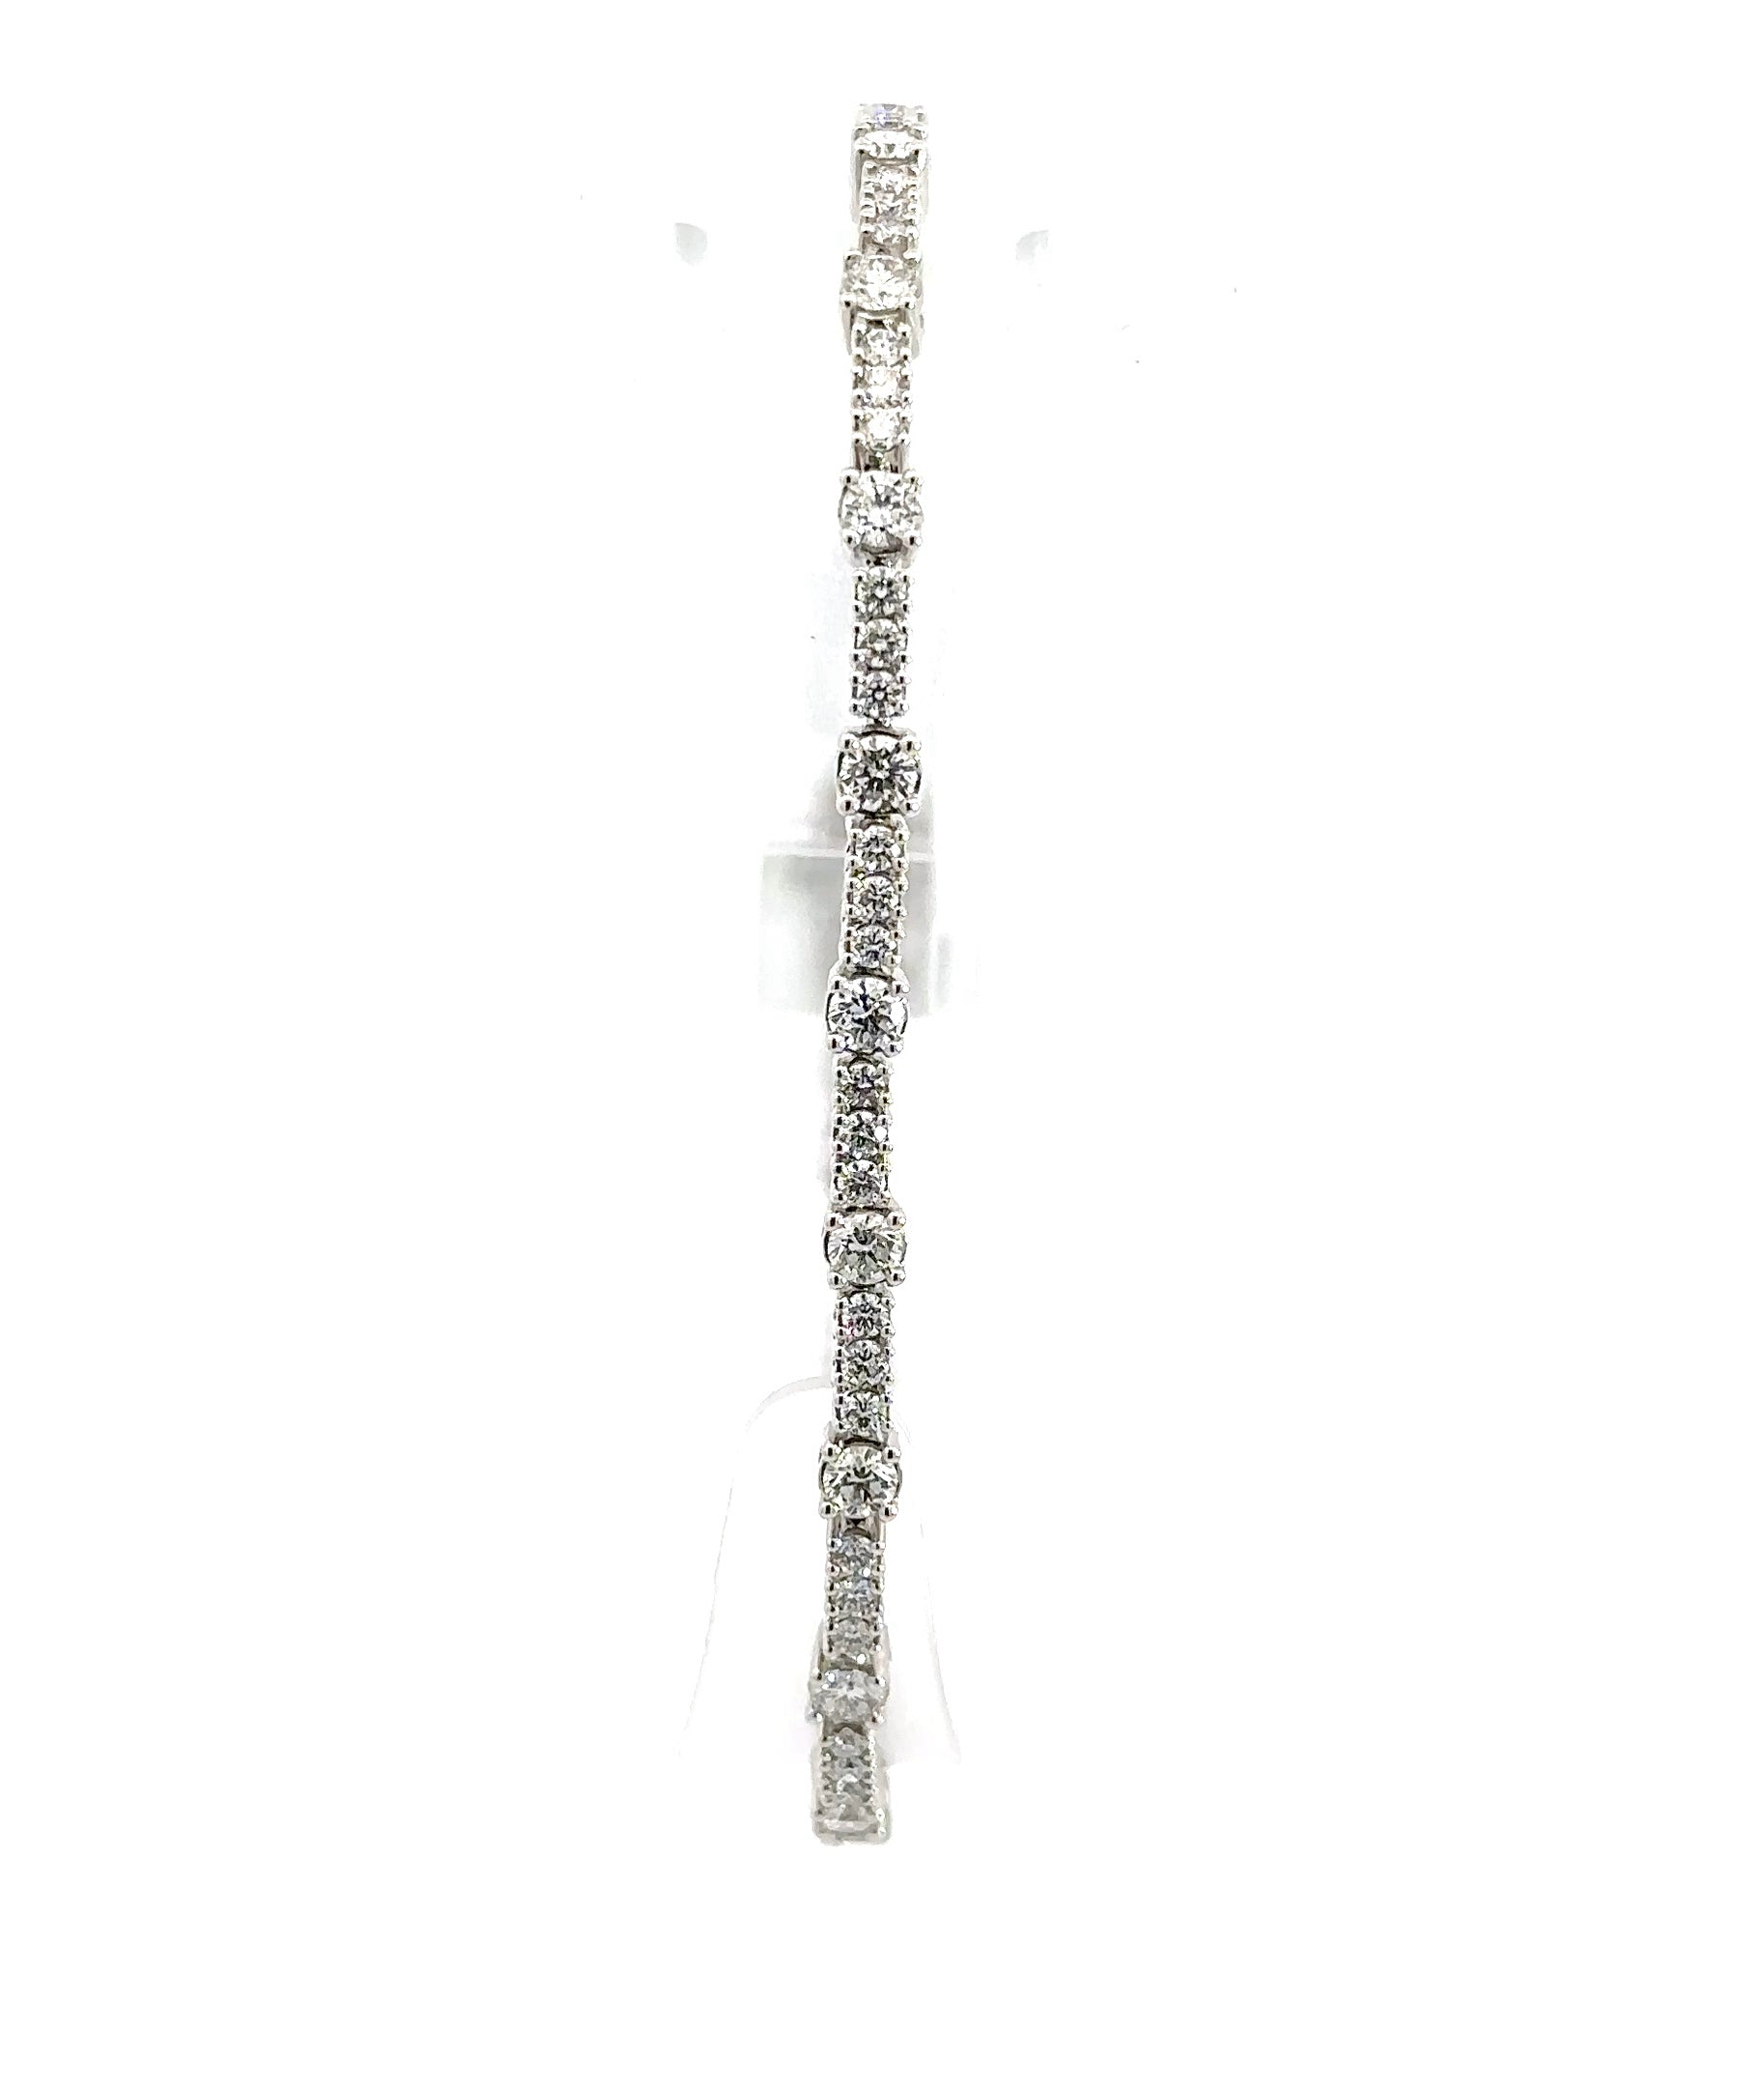 diamond tennis bracelet with alternating sizes of round diamonds